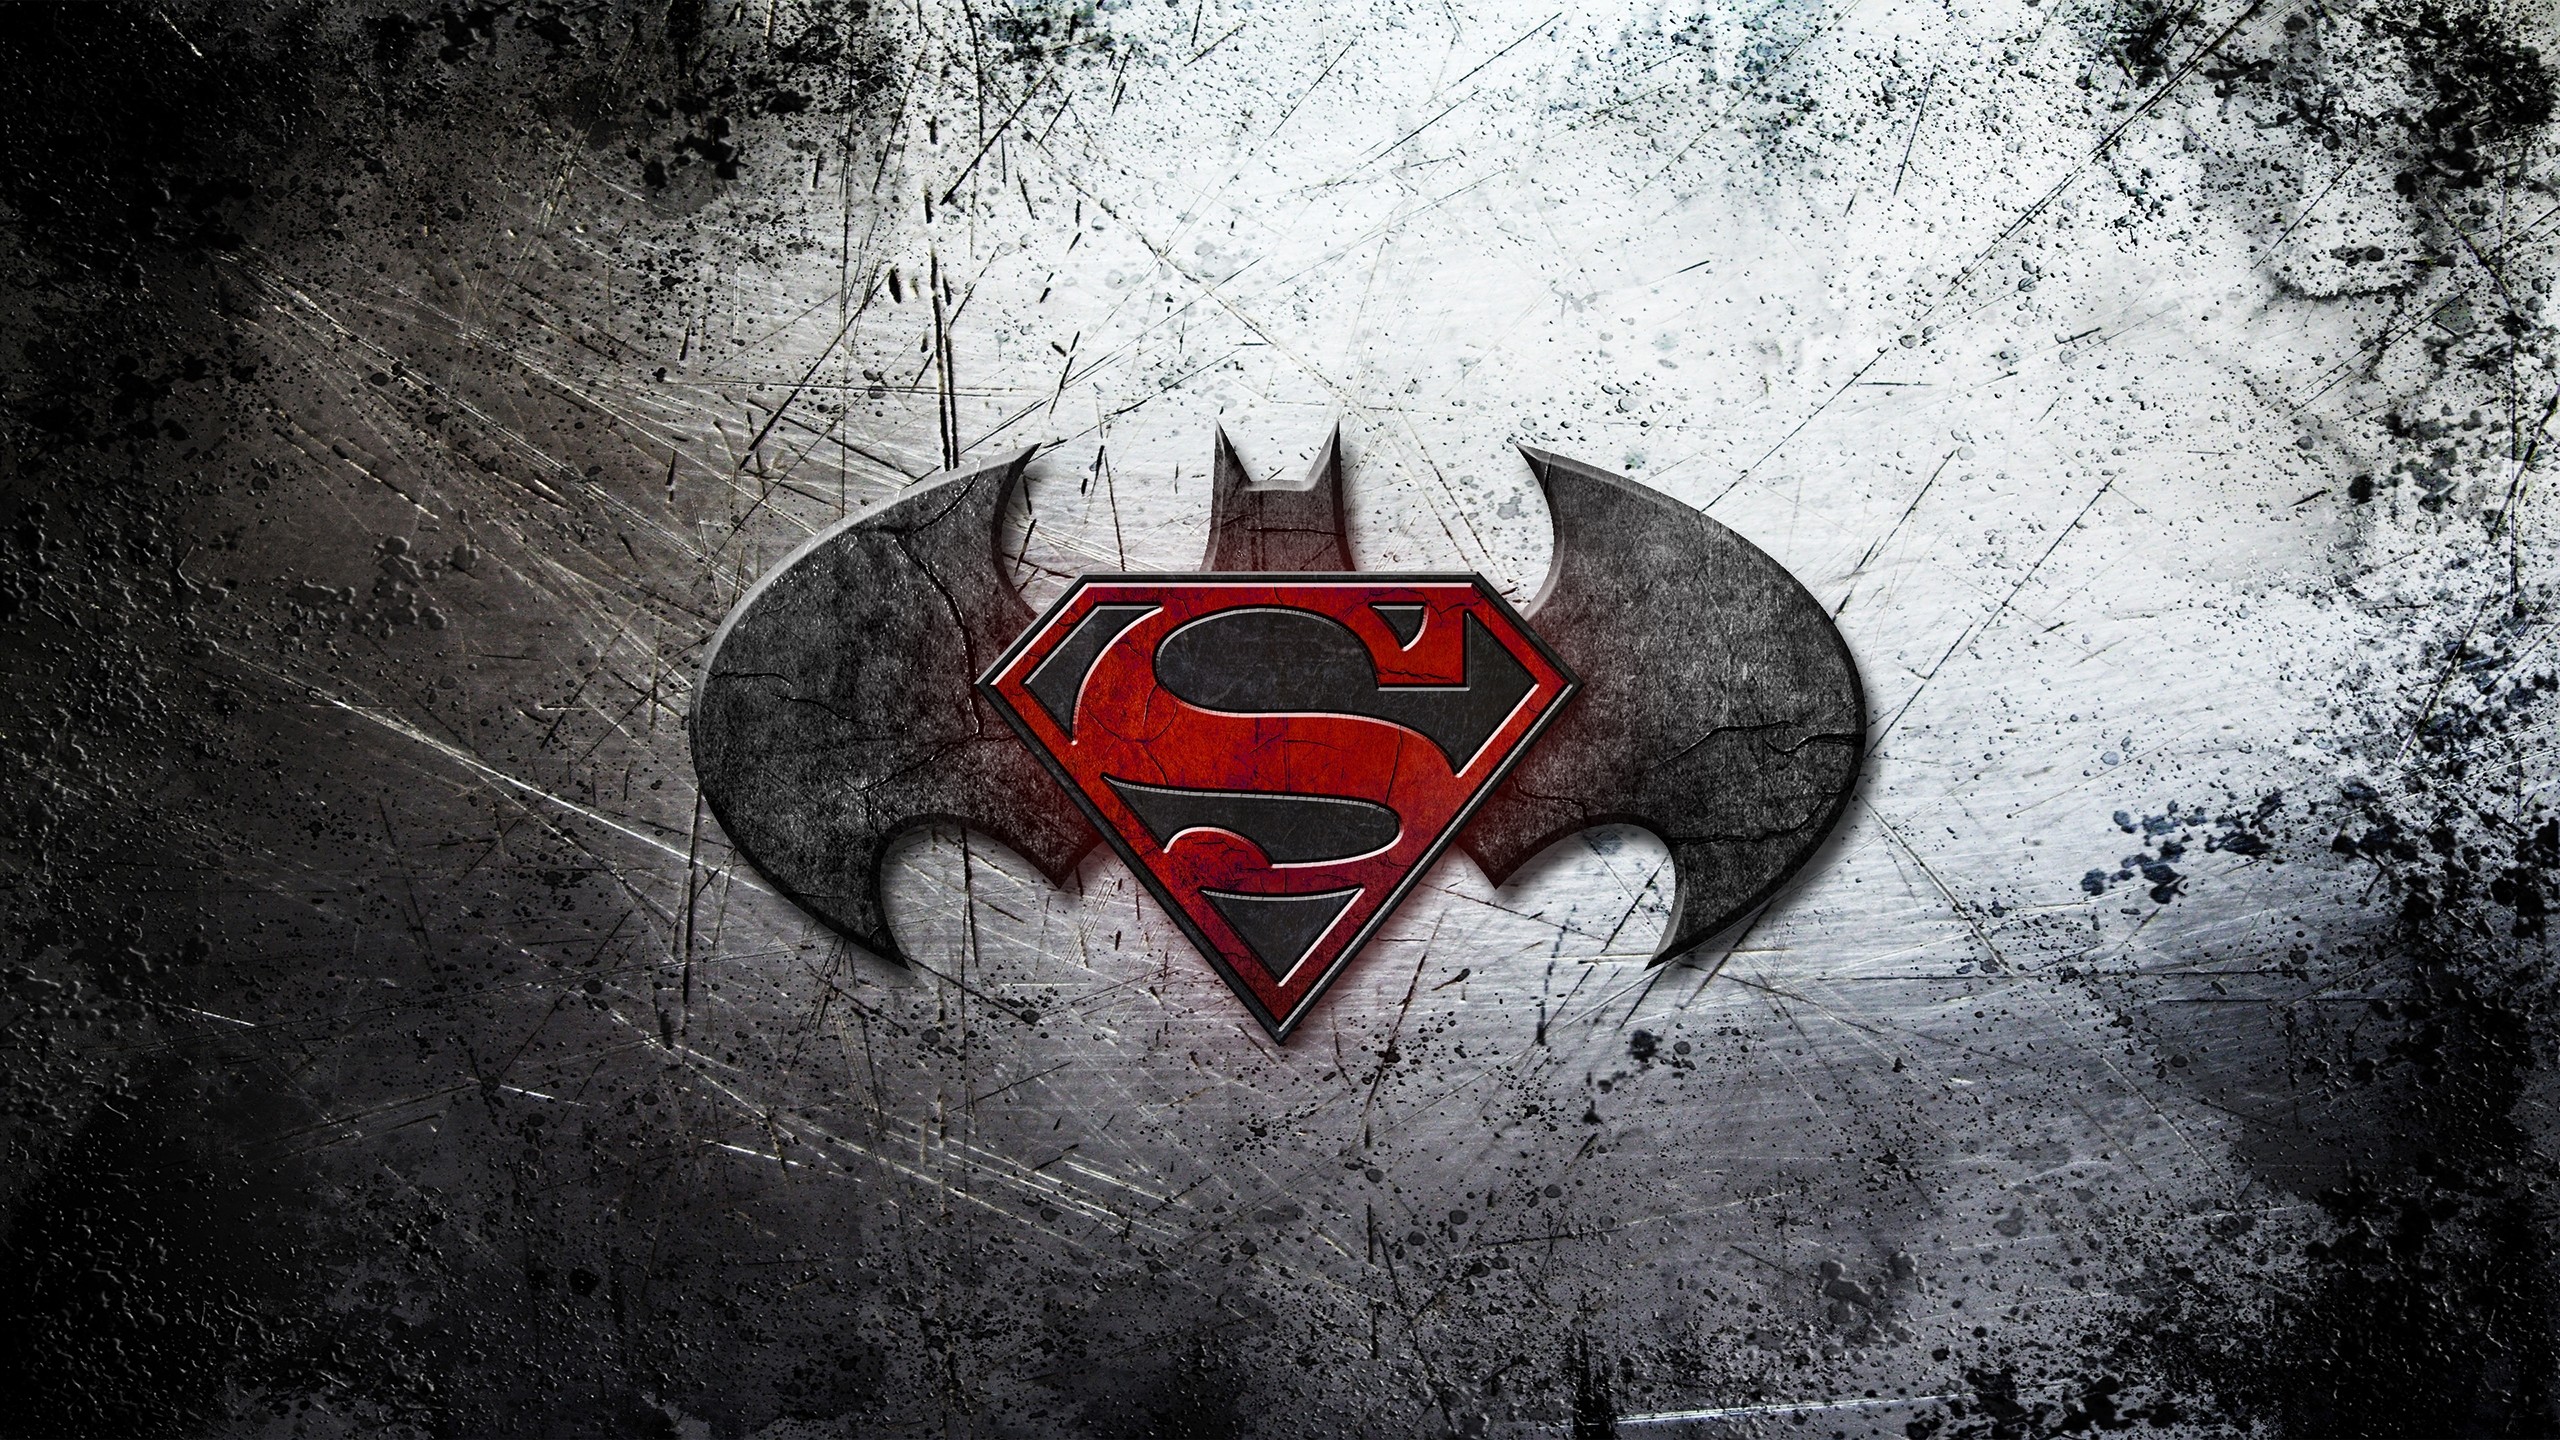 2560x1440 Batman vs Superman Logo Wallpaper in High Resolution at Movies .